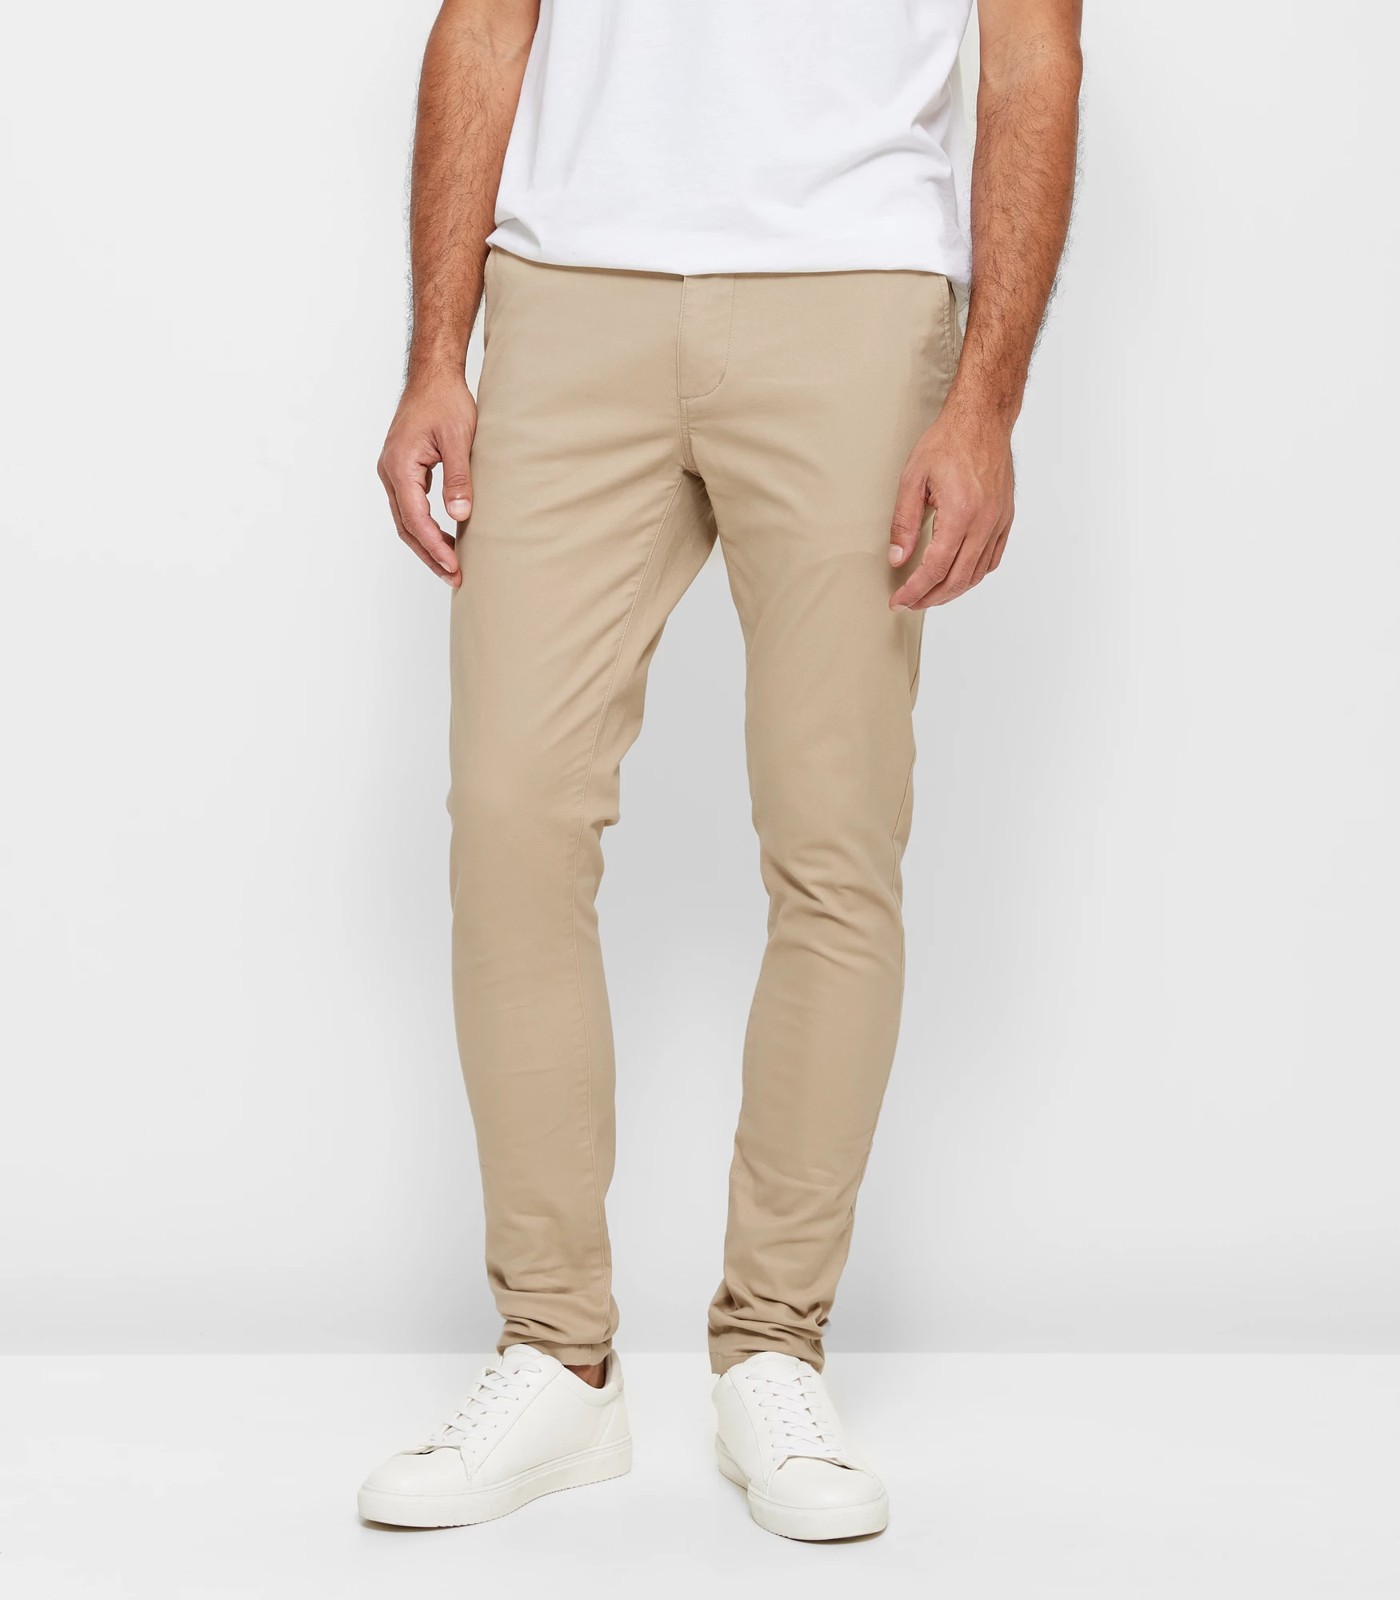 Skinny Chino Pants - Tan | Target Australia